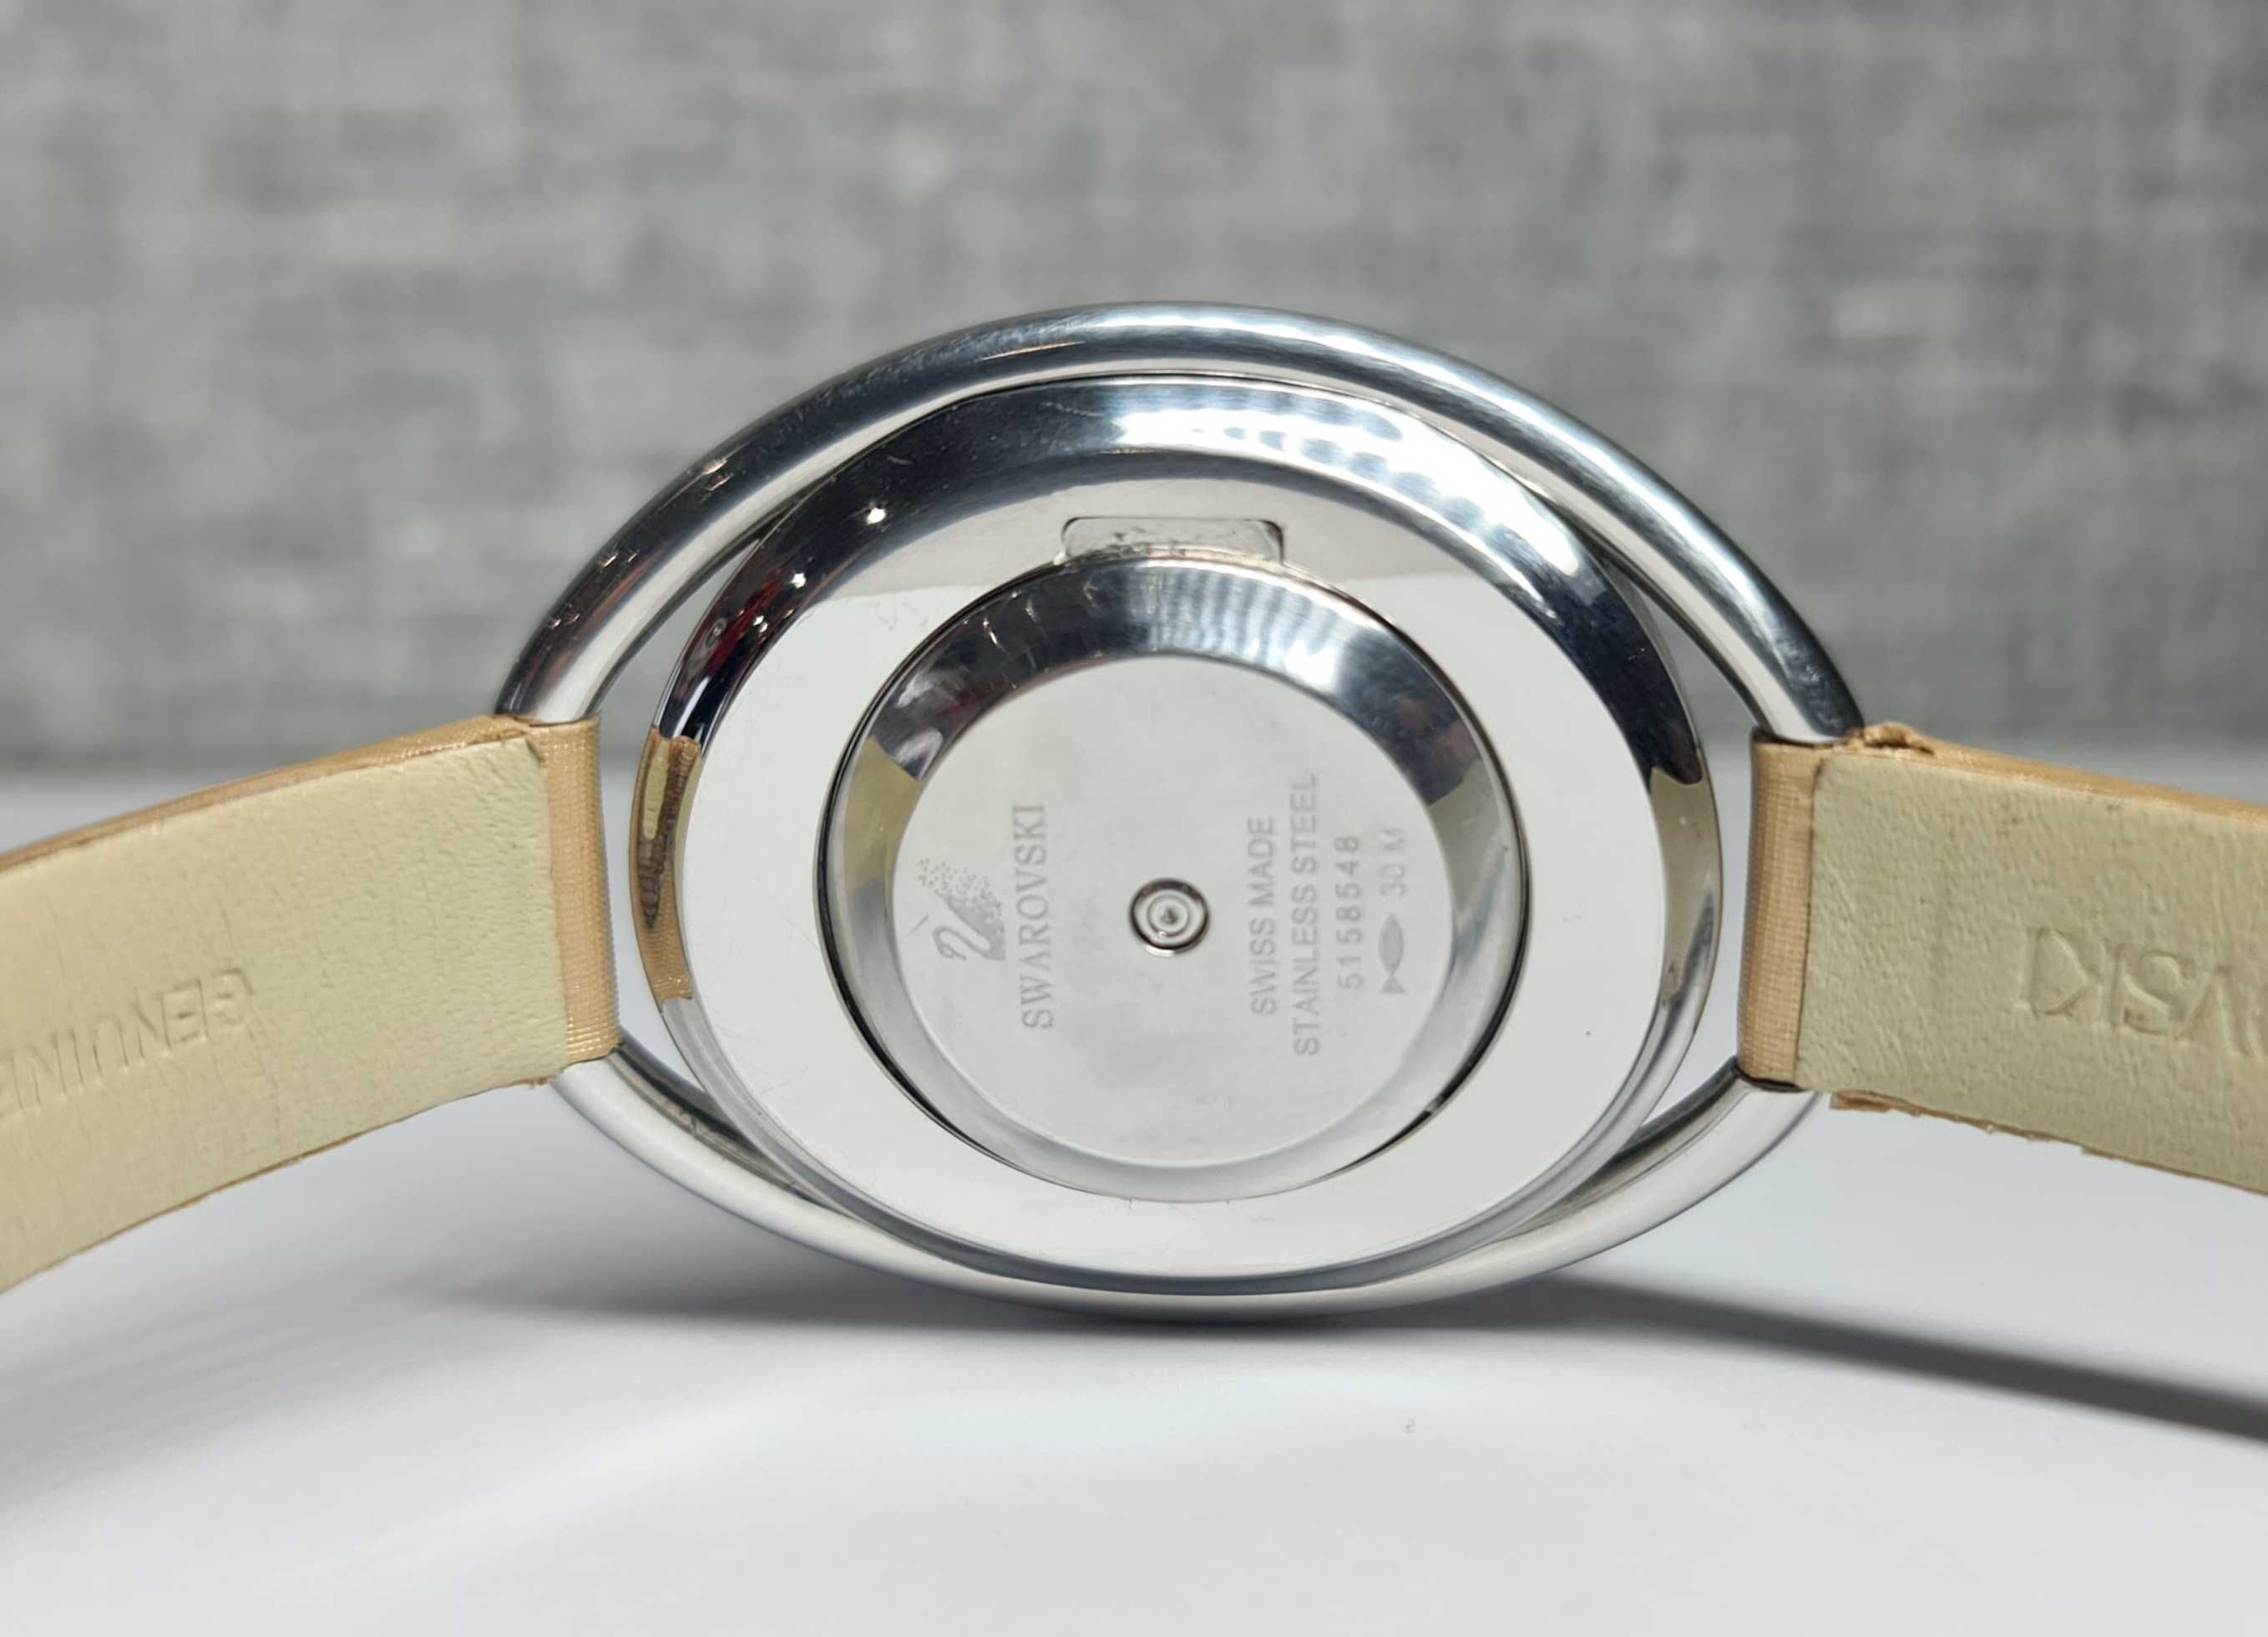 Жіночий годинник Swarovski Crystalline Aura 5158548 Swiss made